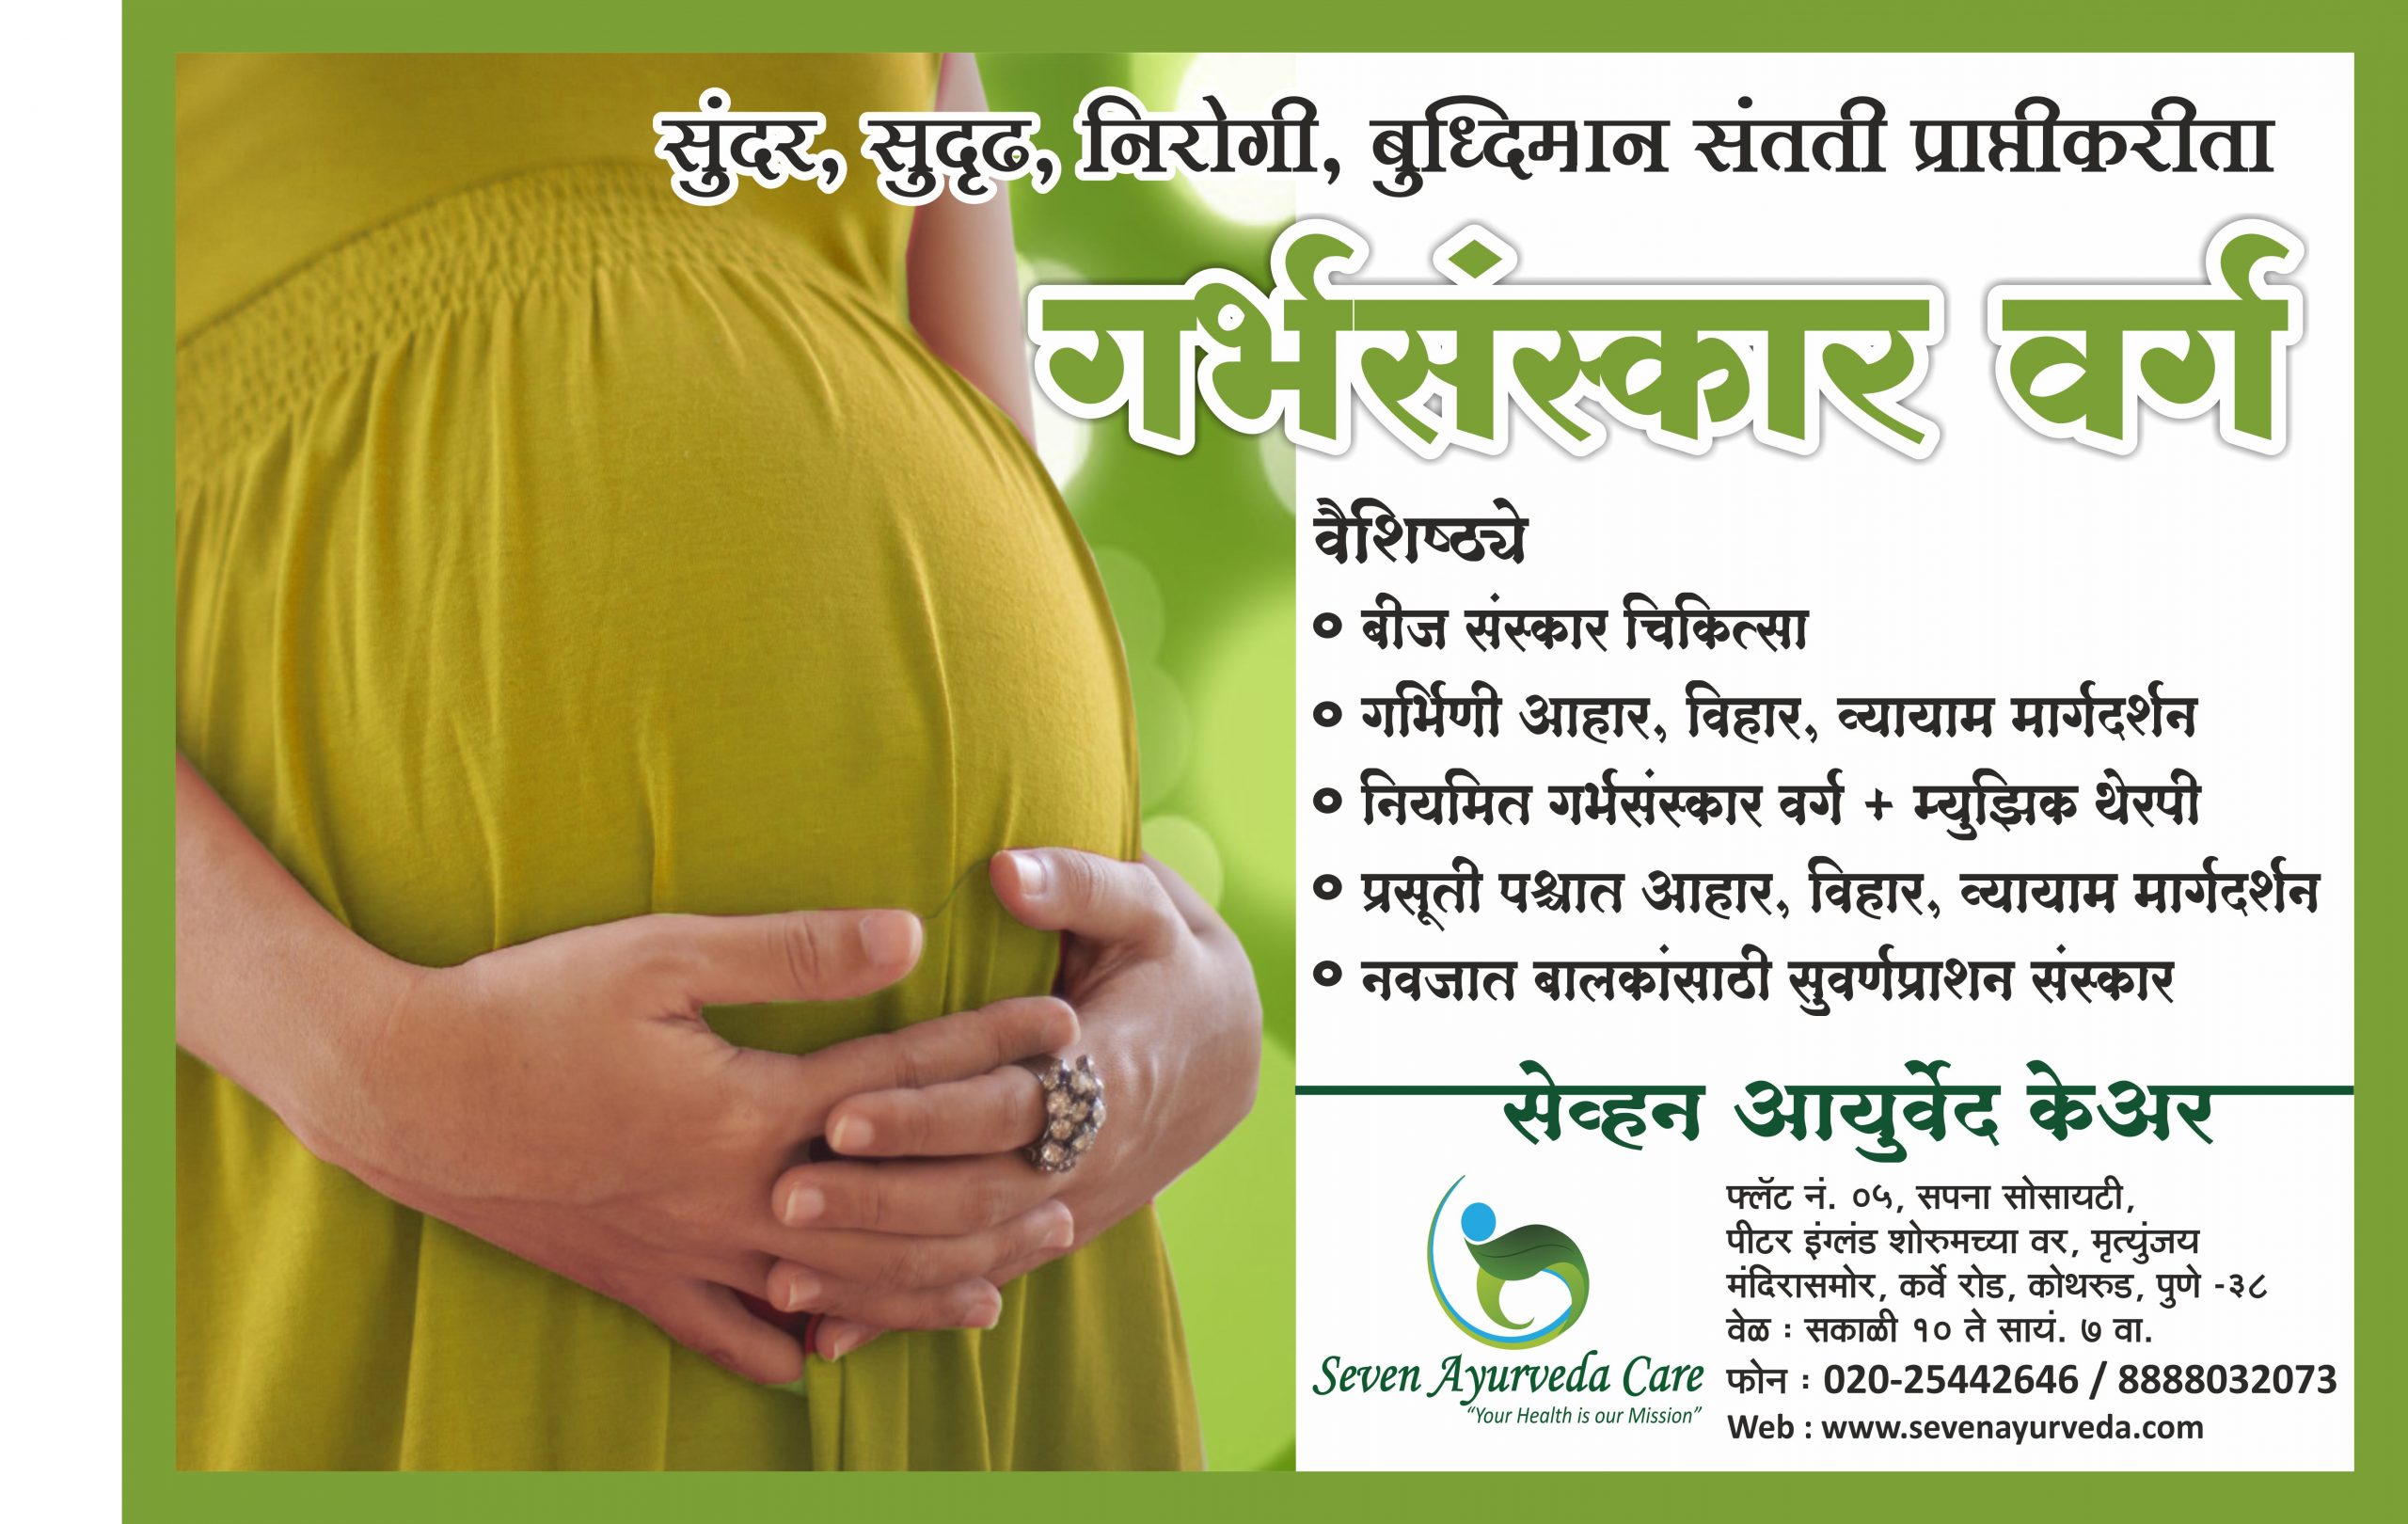 Ayurvedic Diet in Pregnancy